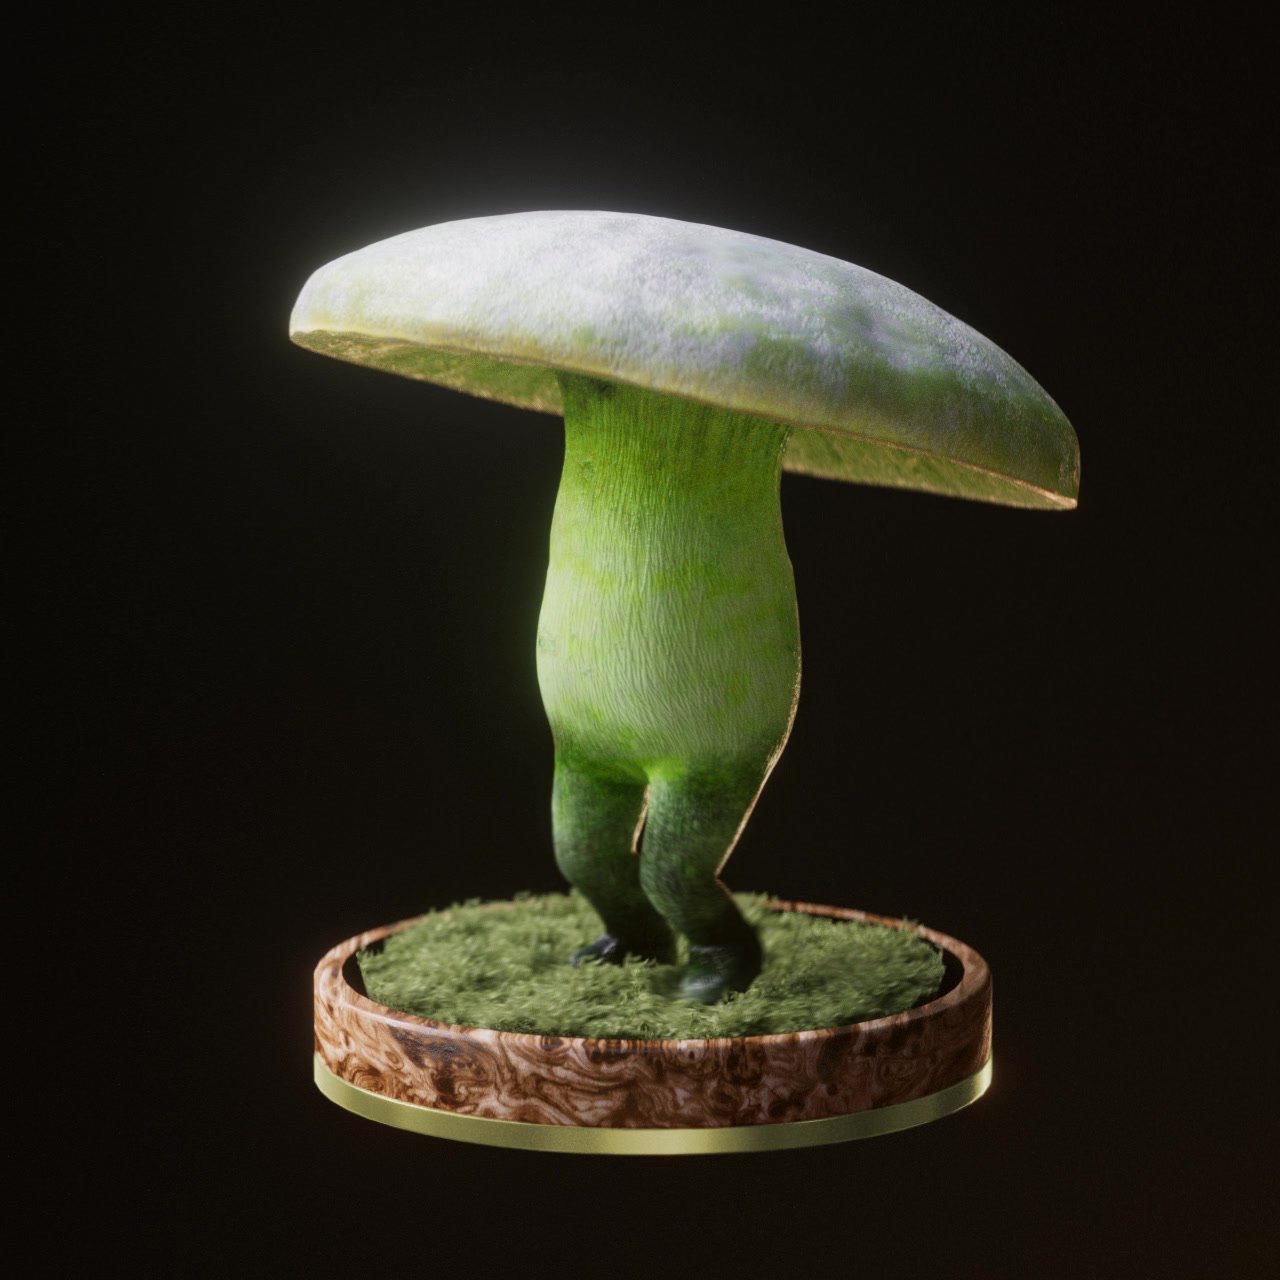 Fungi #33